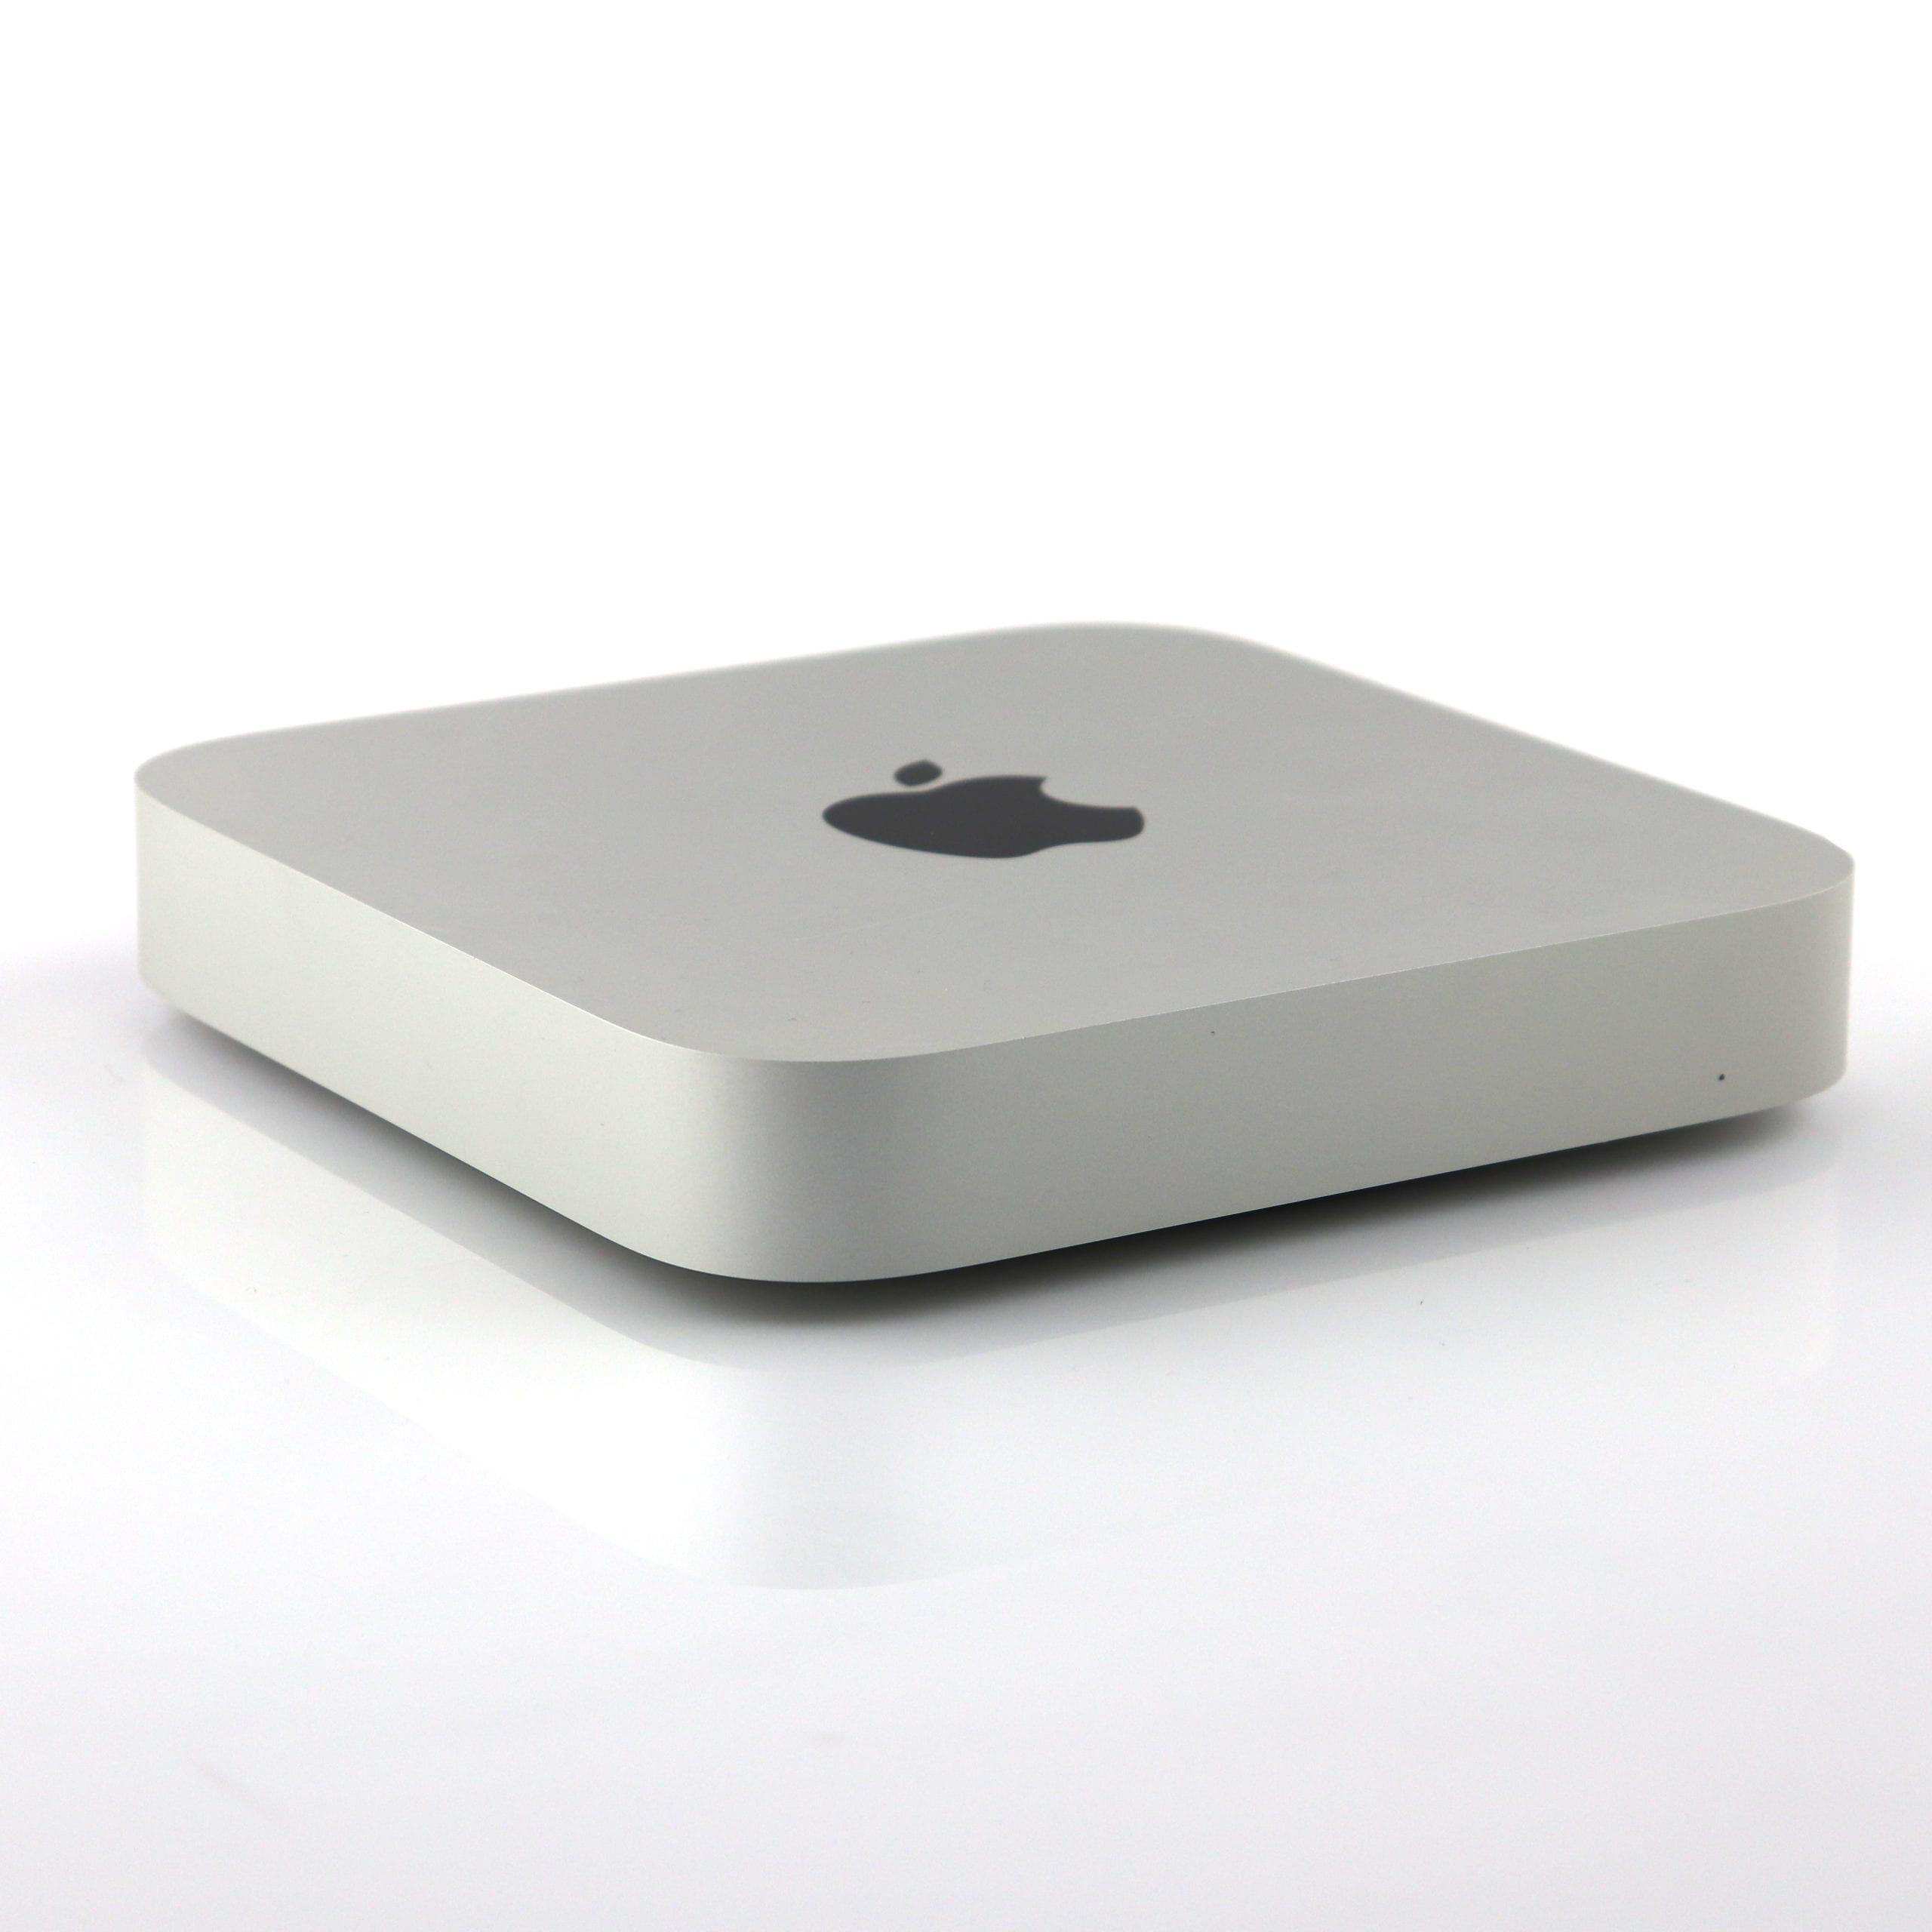 1 x Apple Mac Mini Apple Silicon 3.2 GHz (2020)